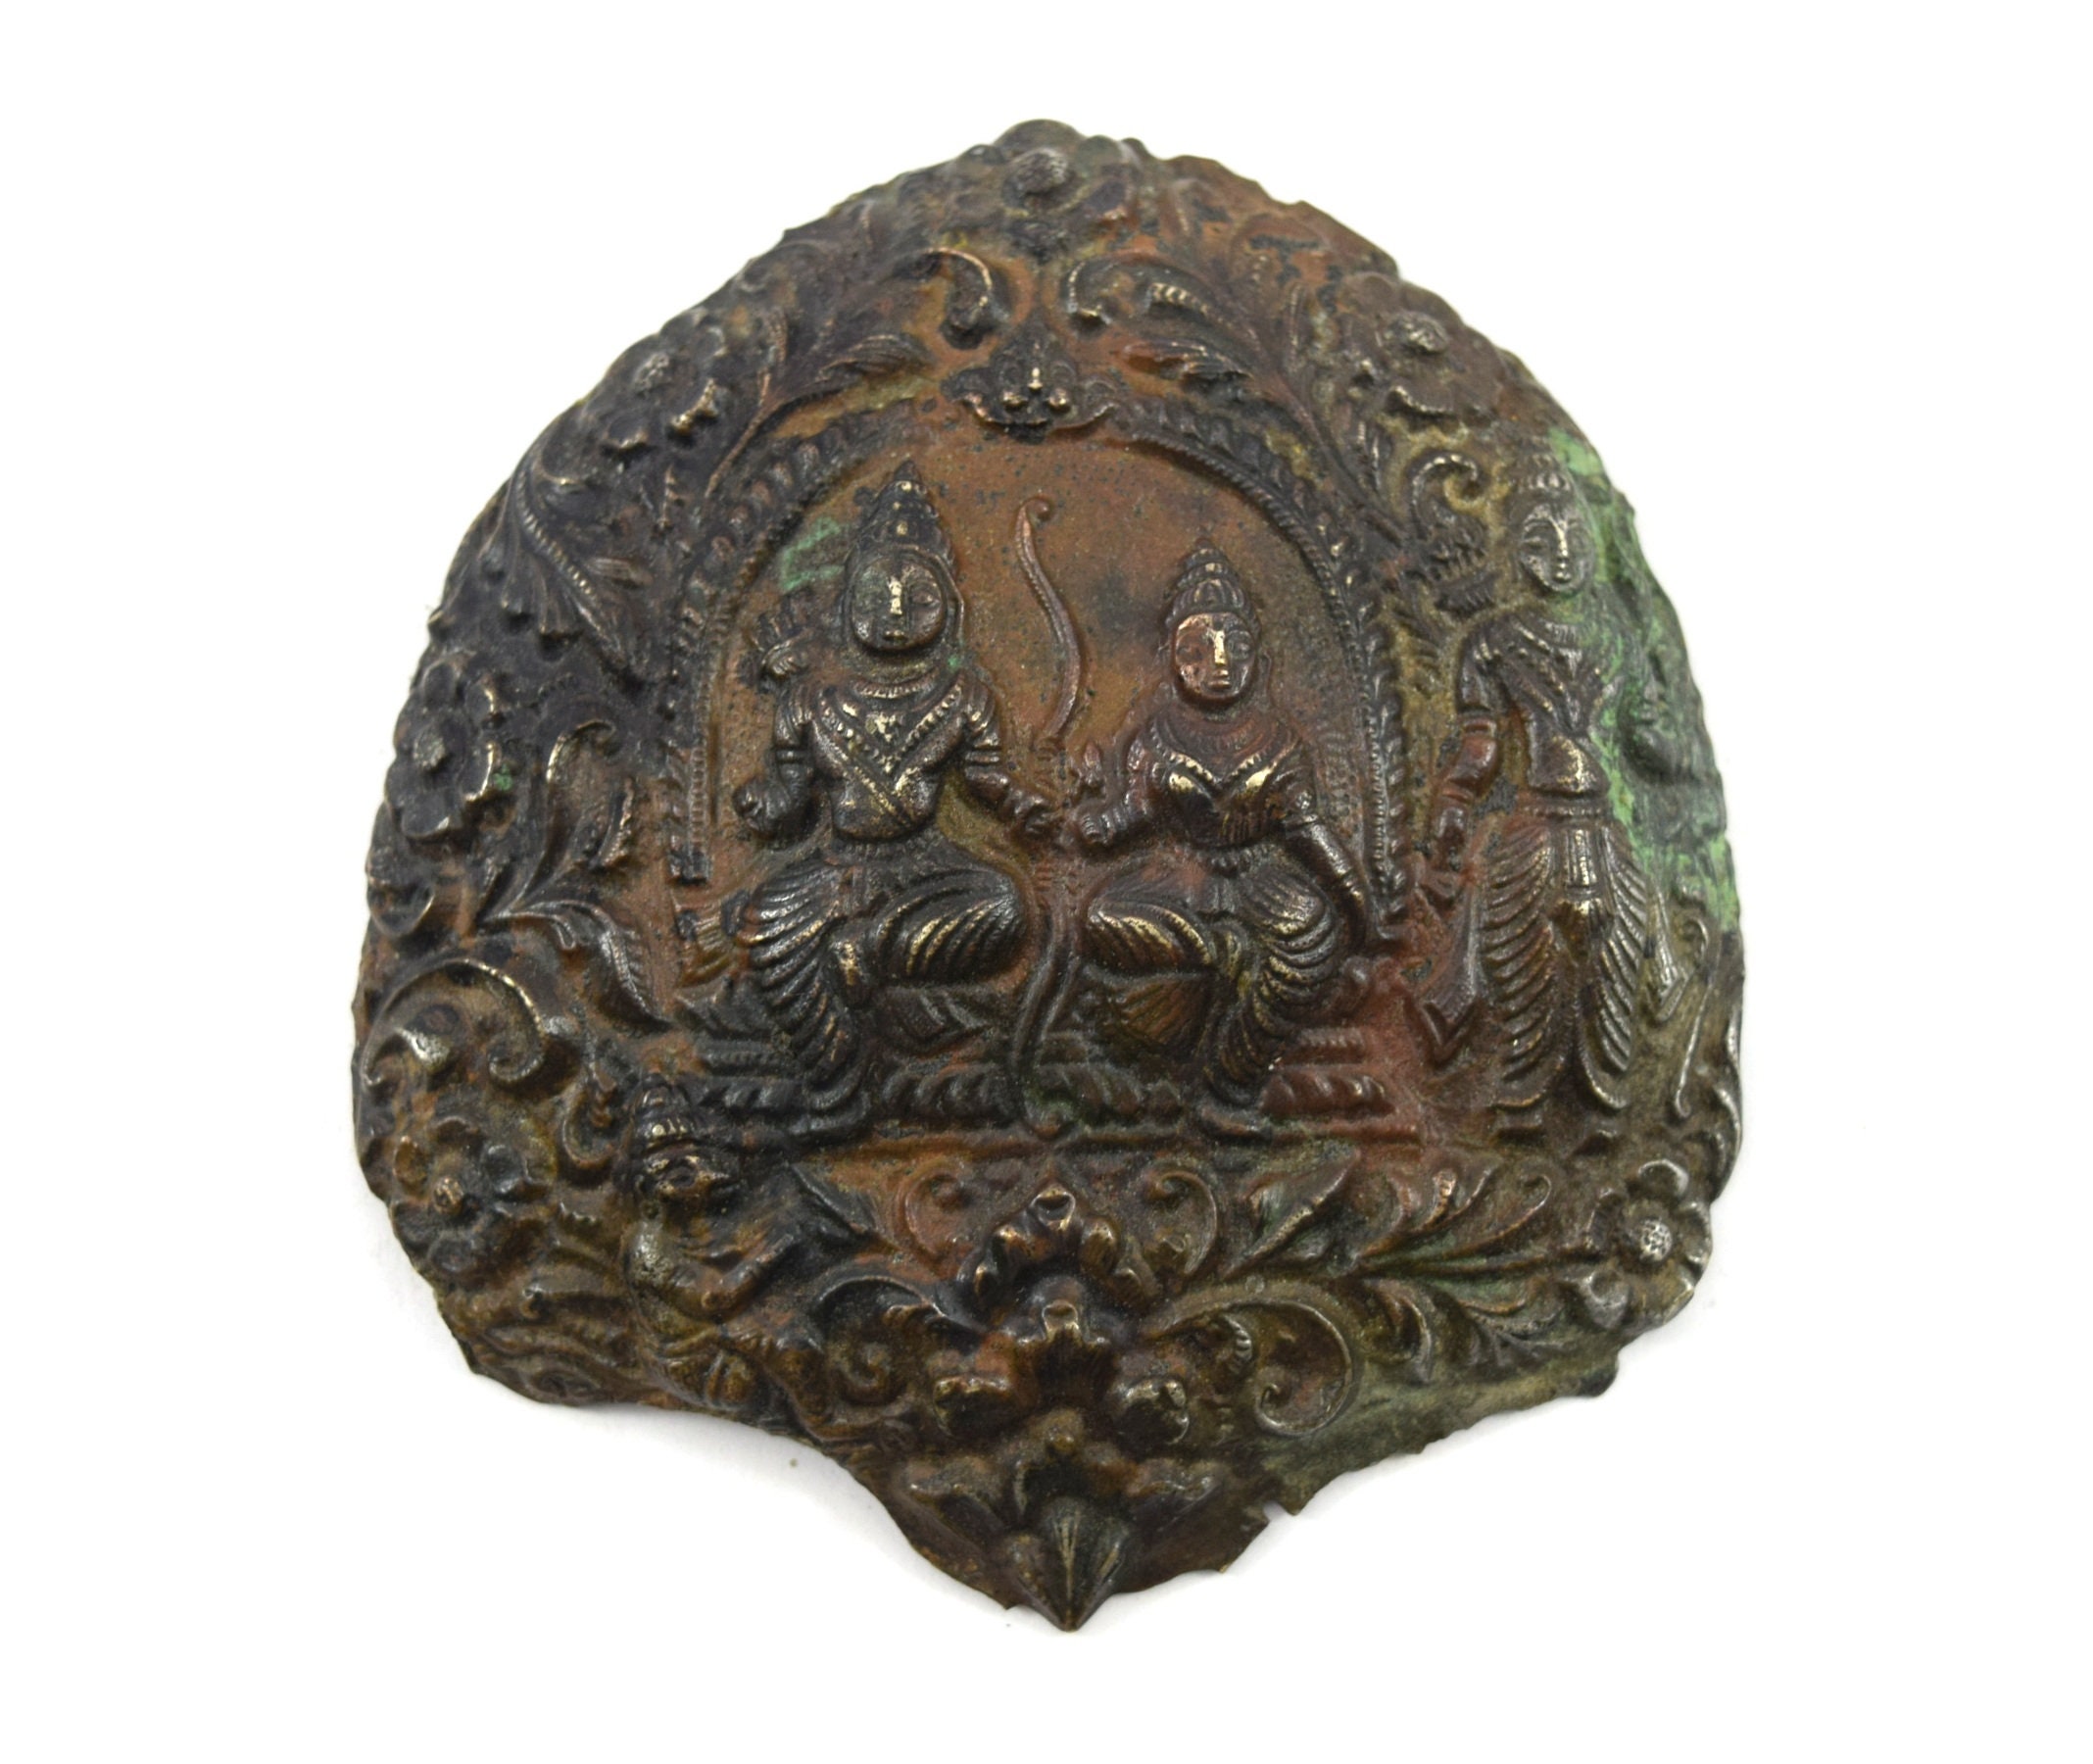 Rare Old Hindu God/Goddess Ram-Sita Mould Stamp Dye Nice Collectible - Antique Religious Holy God Ram Sita Figurine Bronze G46-225